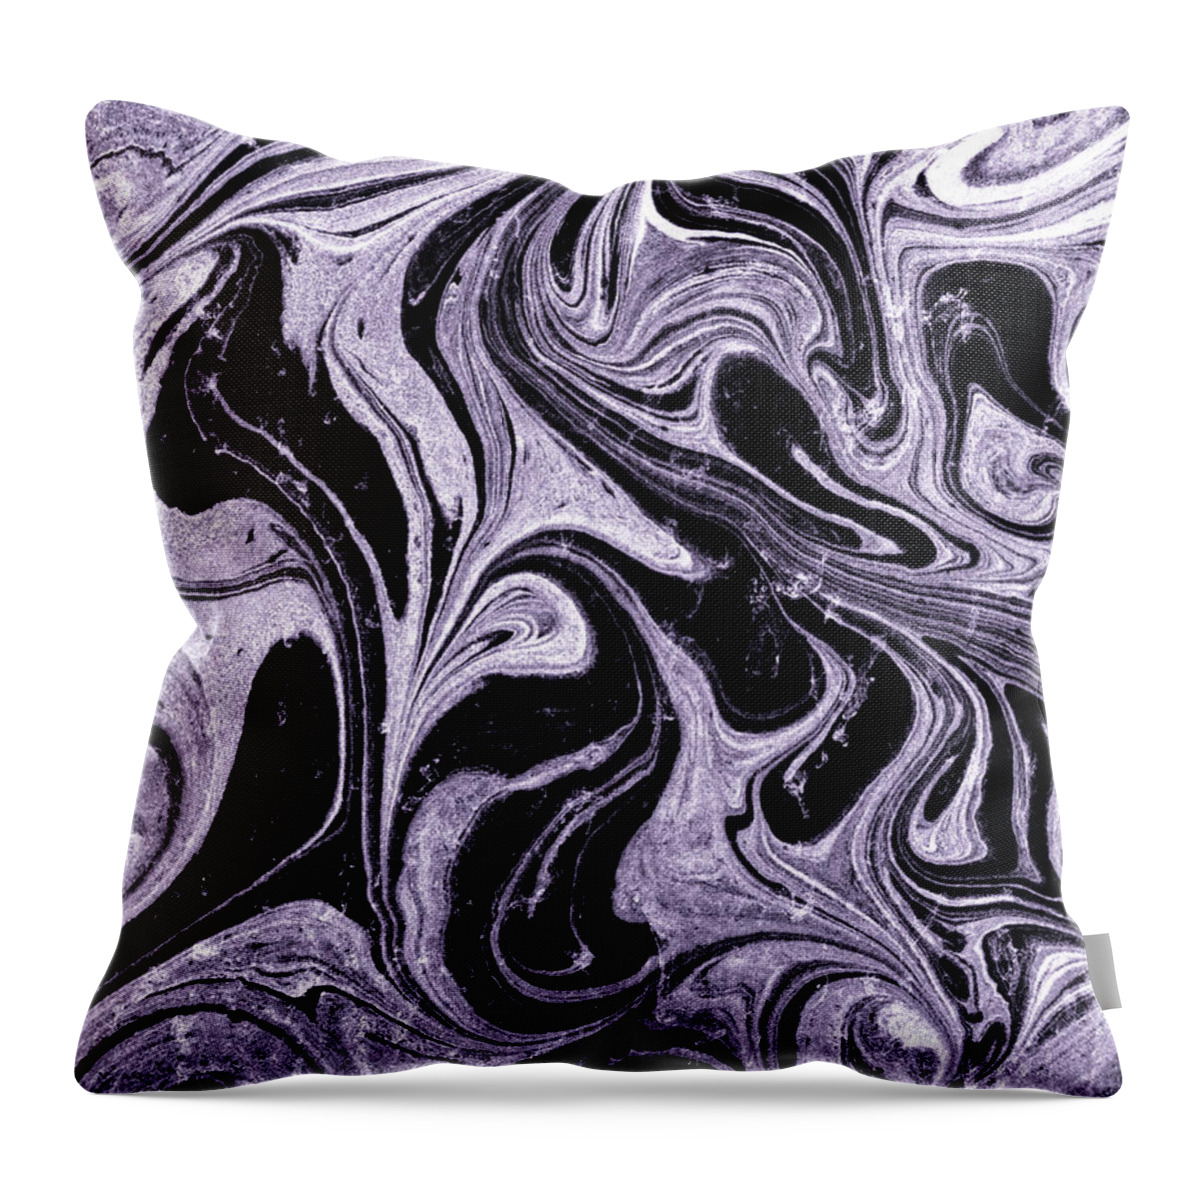 Magic Flower Throw Pillow featuring the painting Magic Purple Abstract Flower Art Deco Style Collection III by Irina Sztukowski